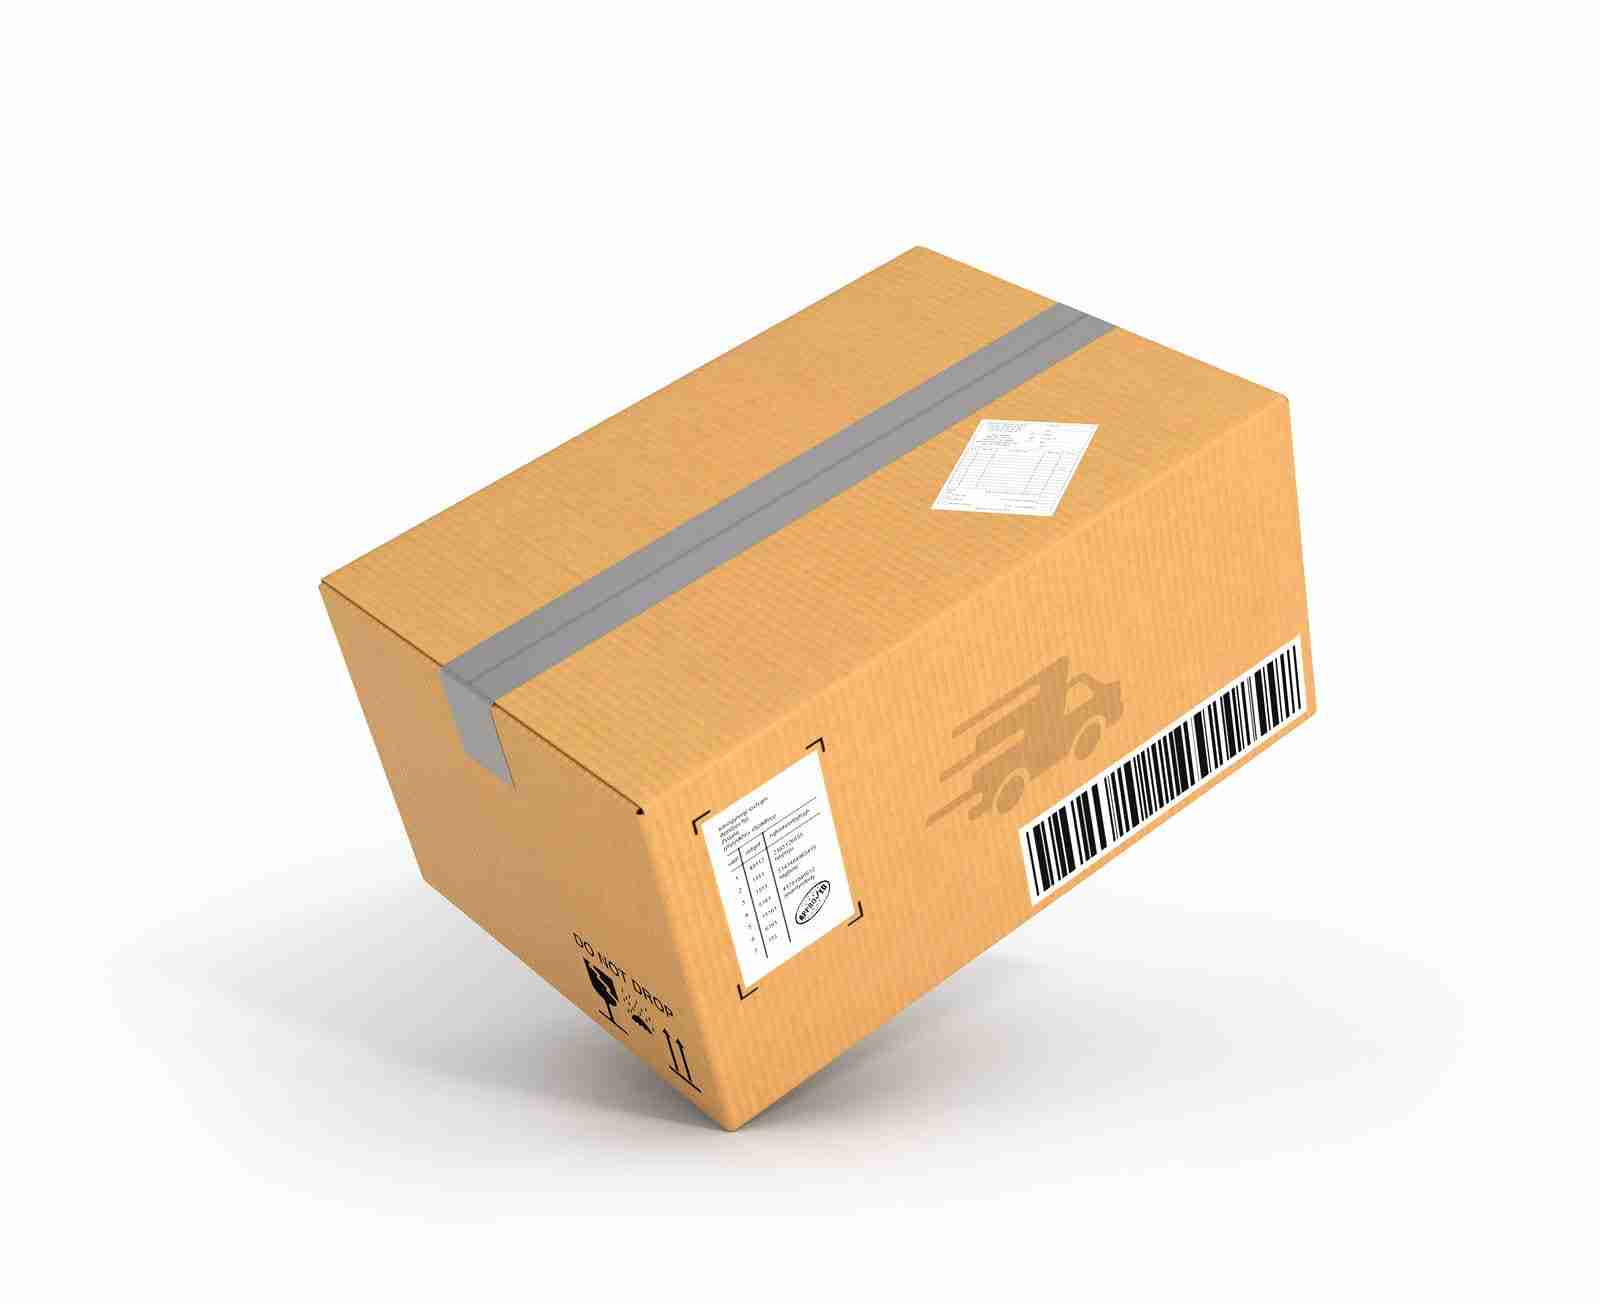 Global package. Transportation одежда коробки. Parcel package. Посылки по всему миру.